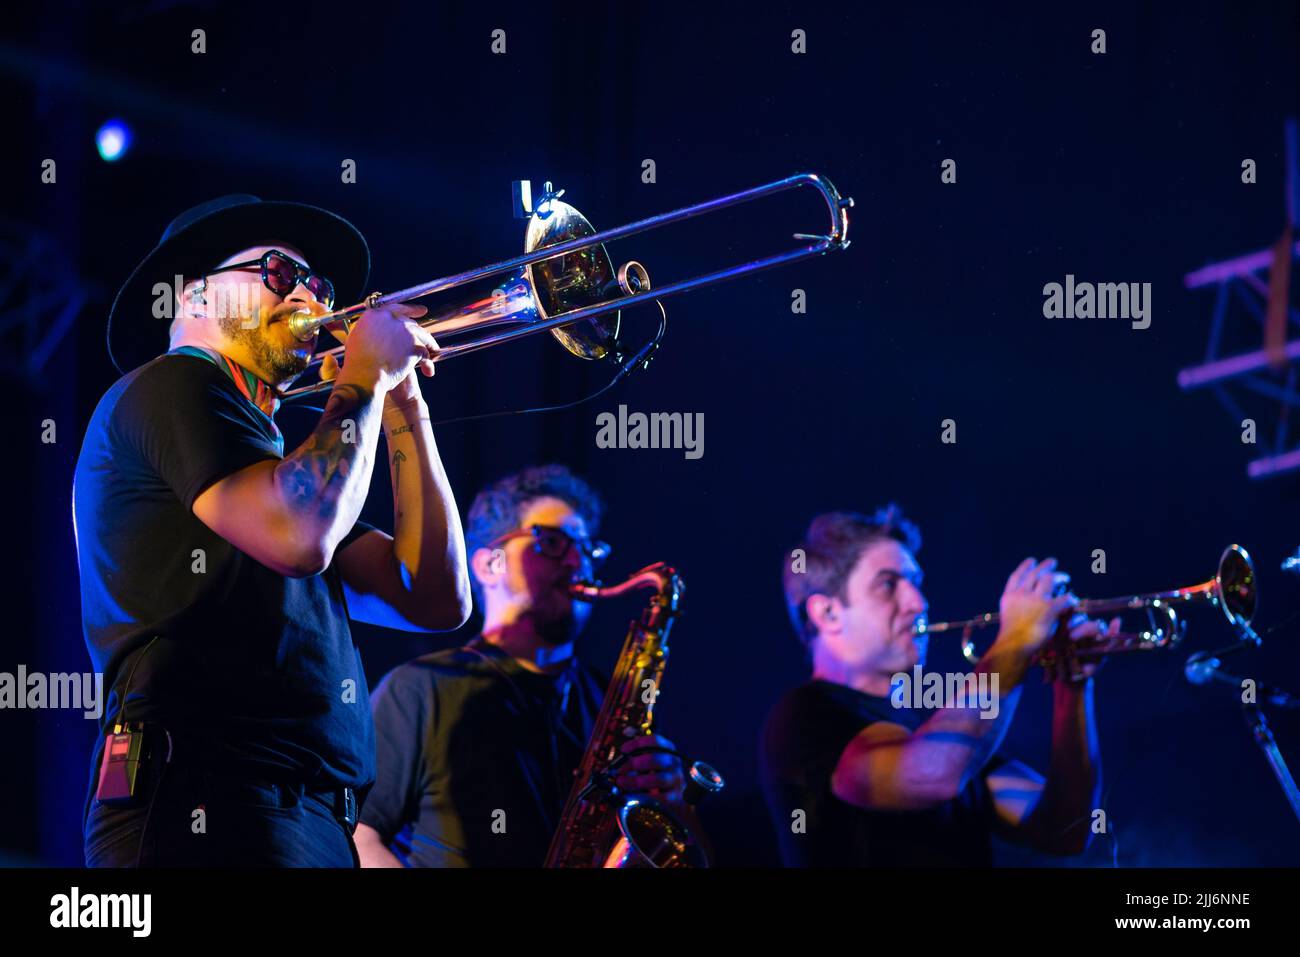 Denis Ramos, Mauricio Ortiz and Martin Gil performs during No Te Va a Gustar concert in Corrientes, Argentina. Stock Photo